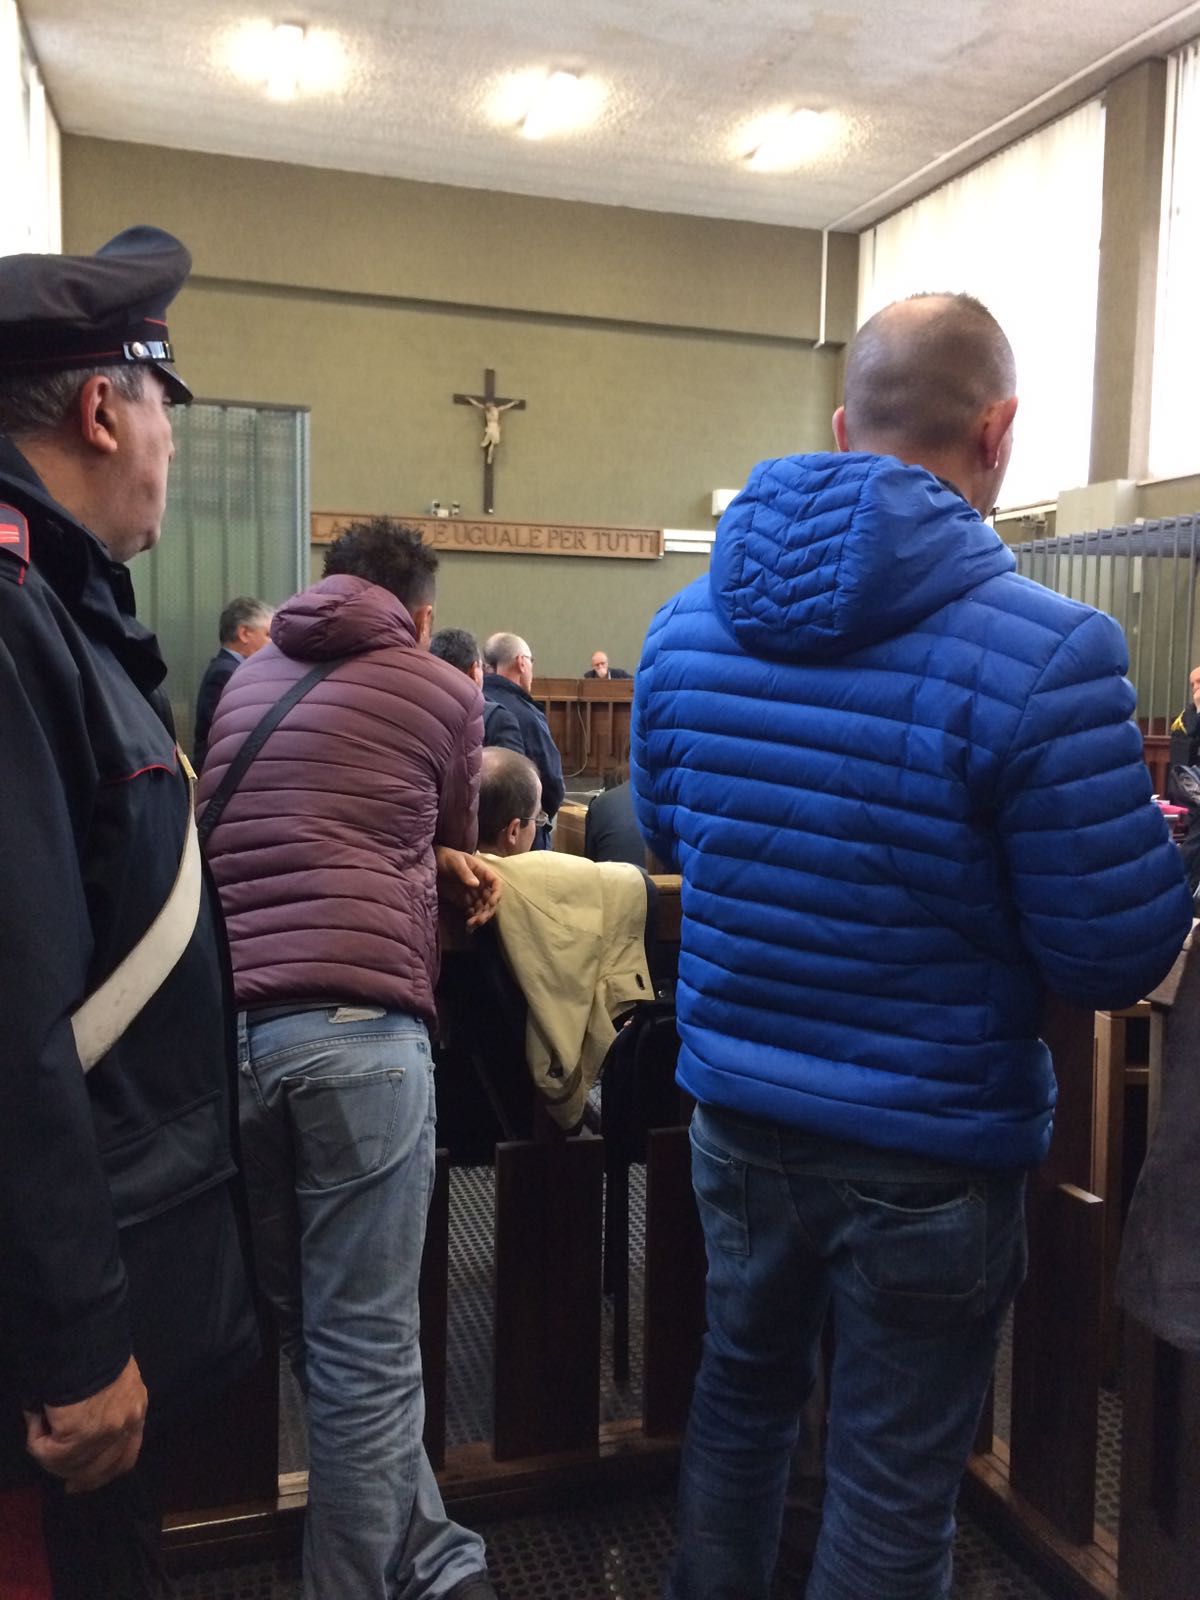 Avellino| In diretta dal Tribunale, terza udienza strage bus